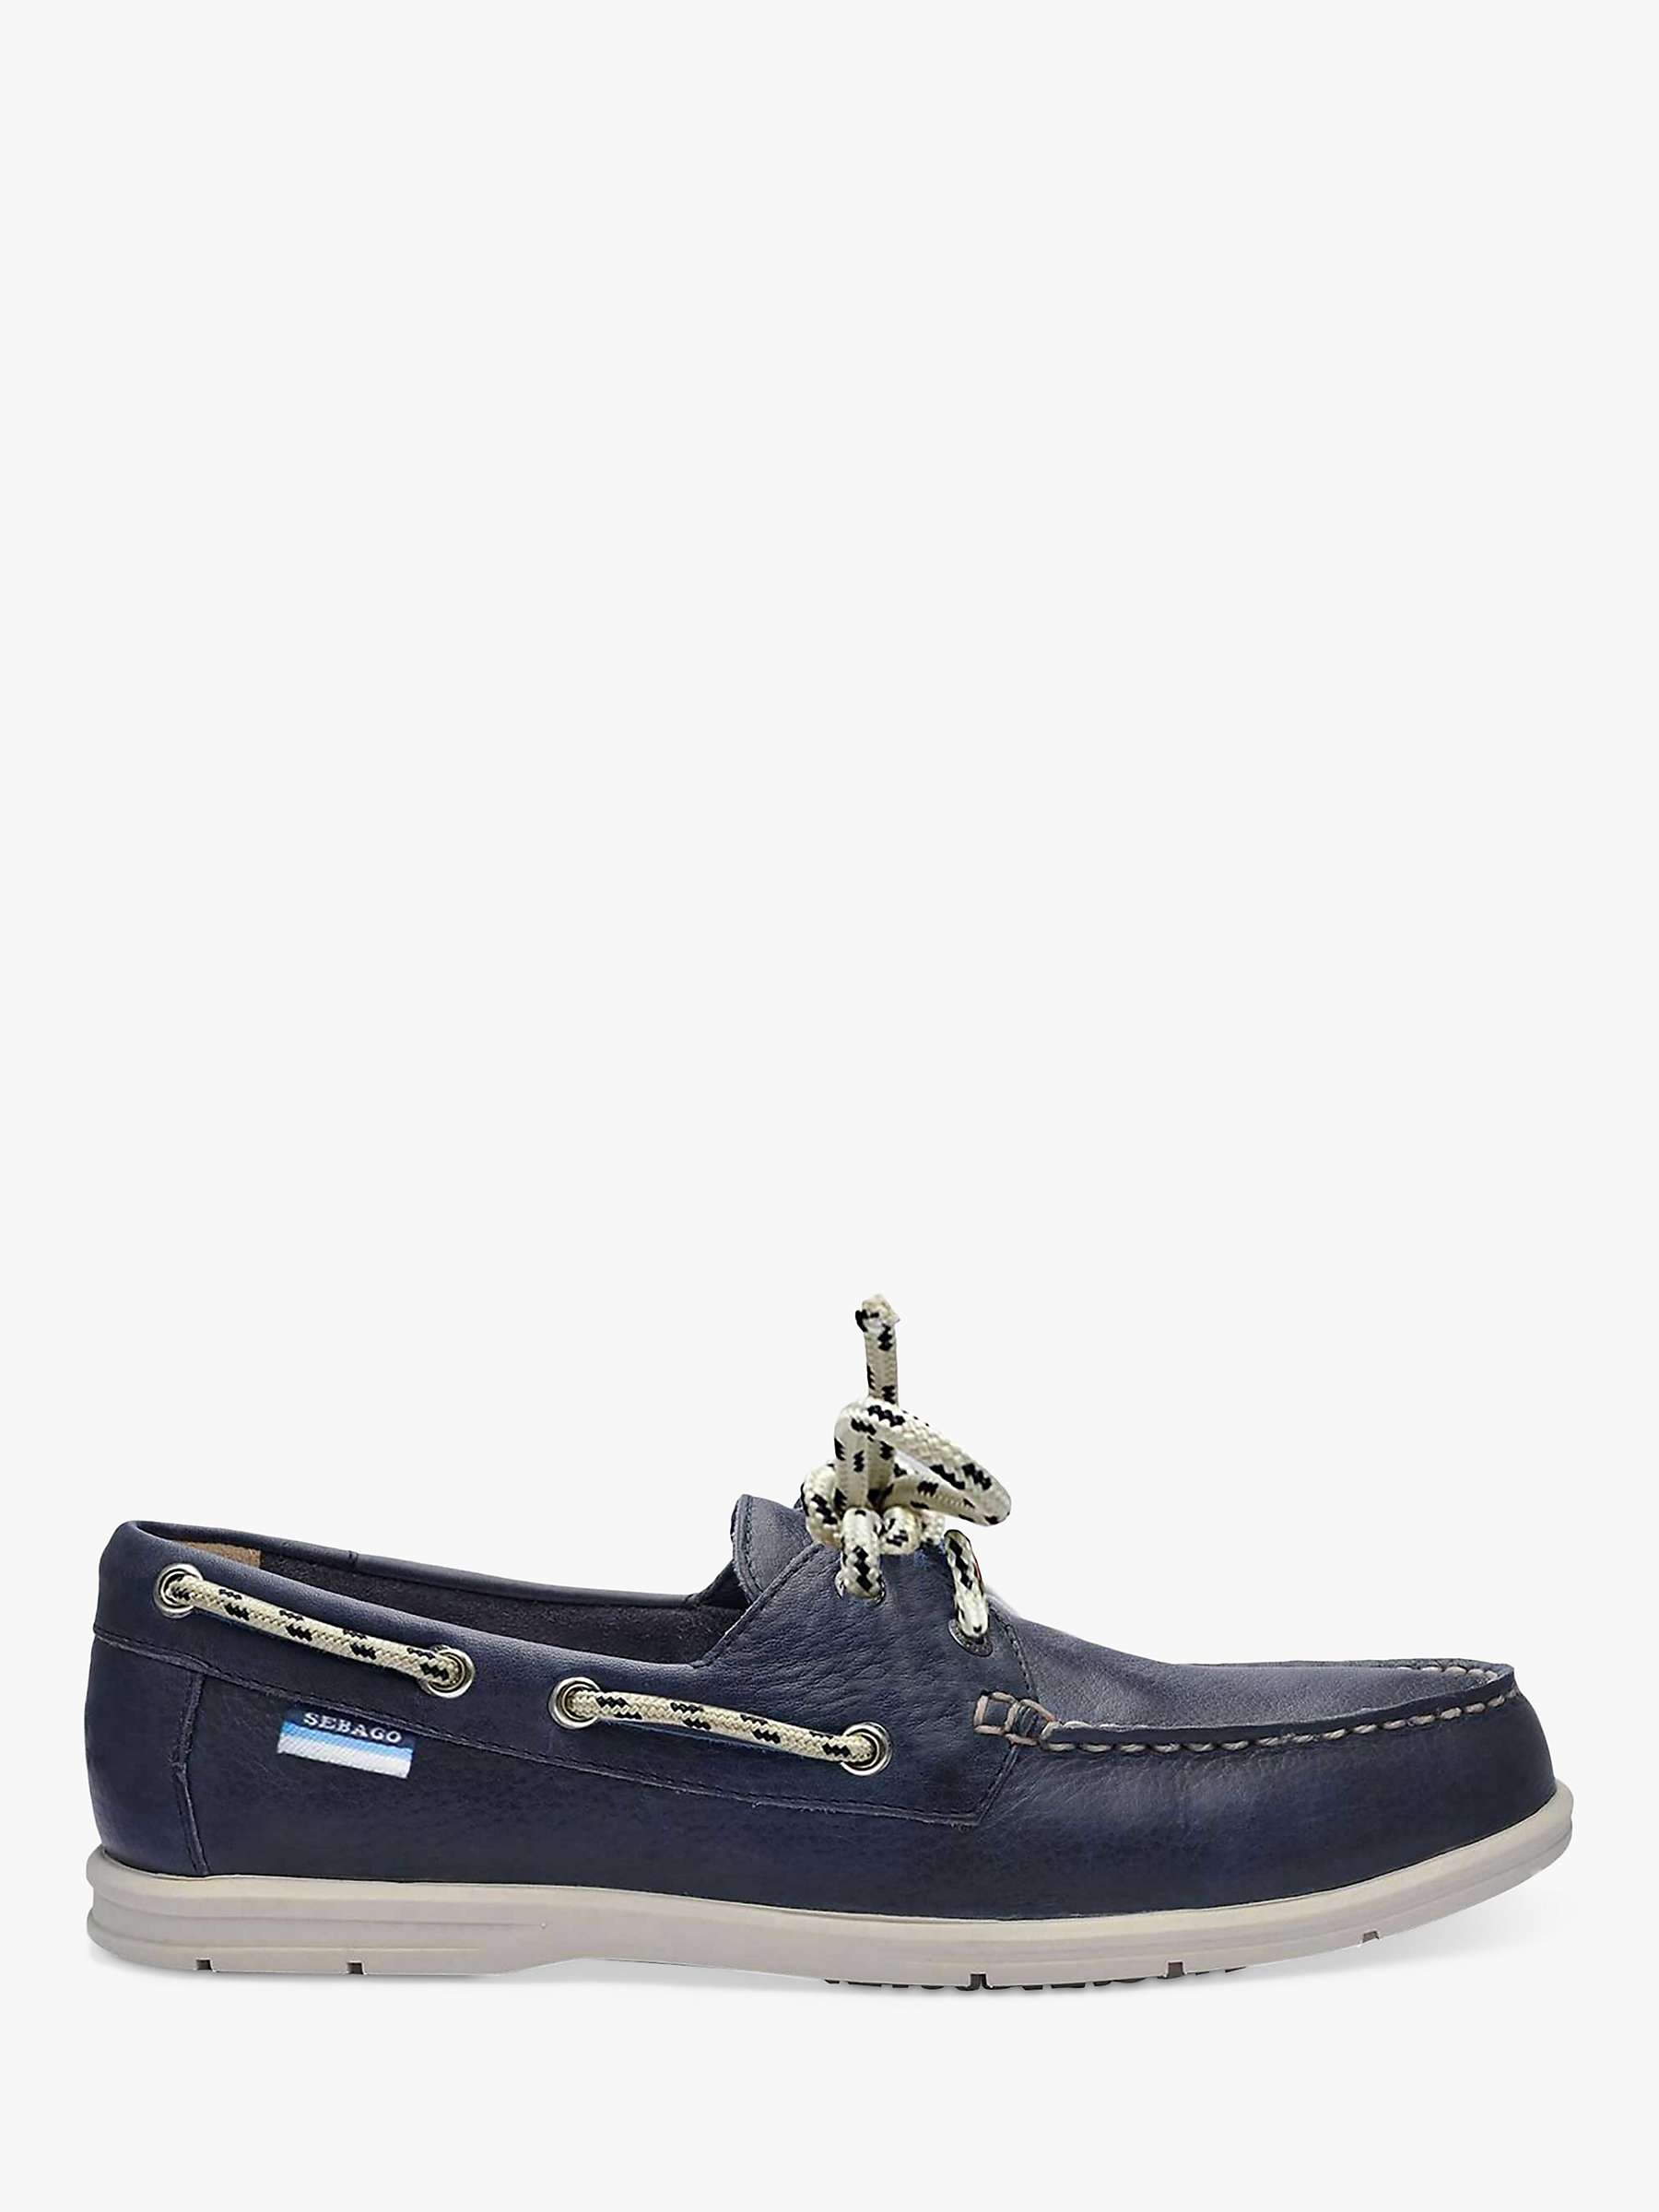 Buy Sebago Jackman Boat Shoes, Navy Online at johnlewis.com